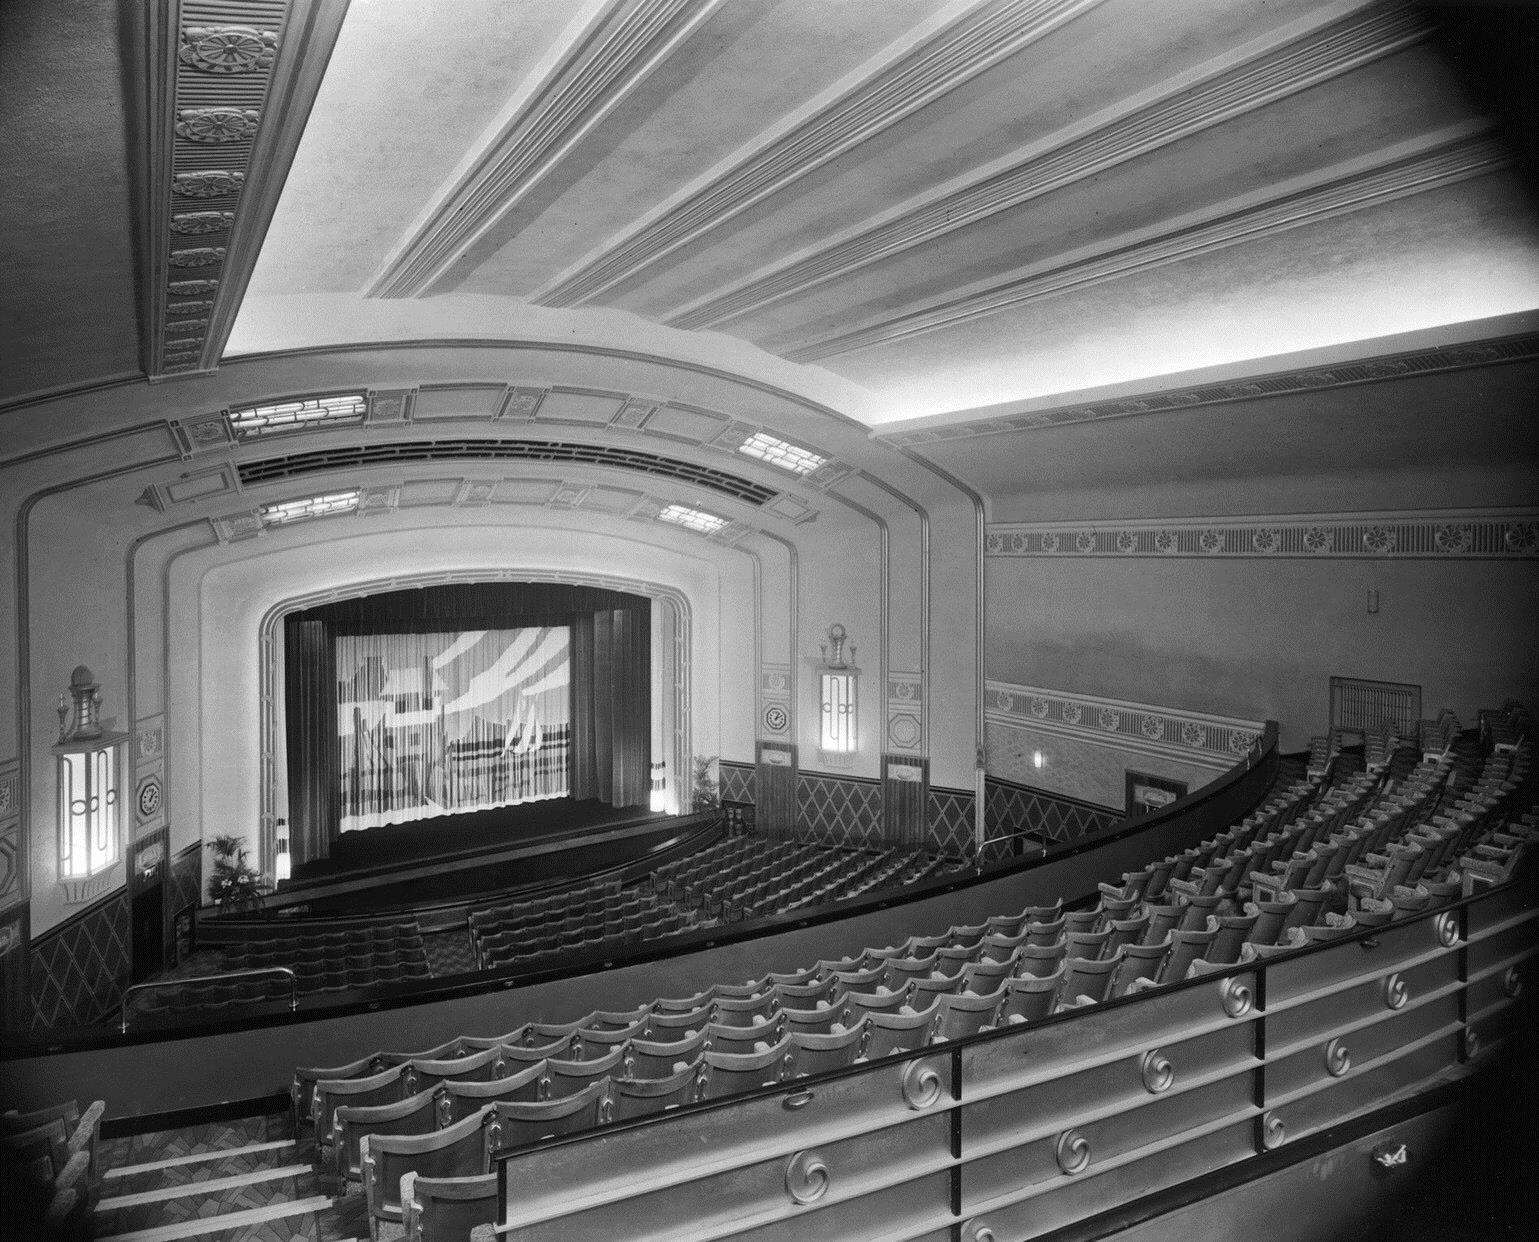 The old Odeon cinema in Ashford